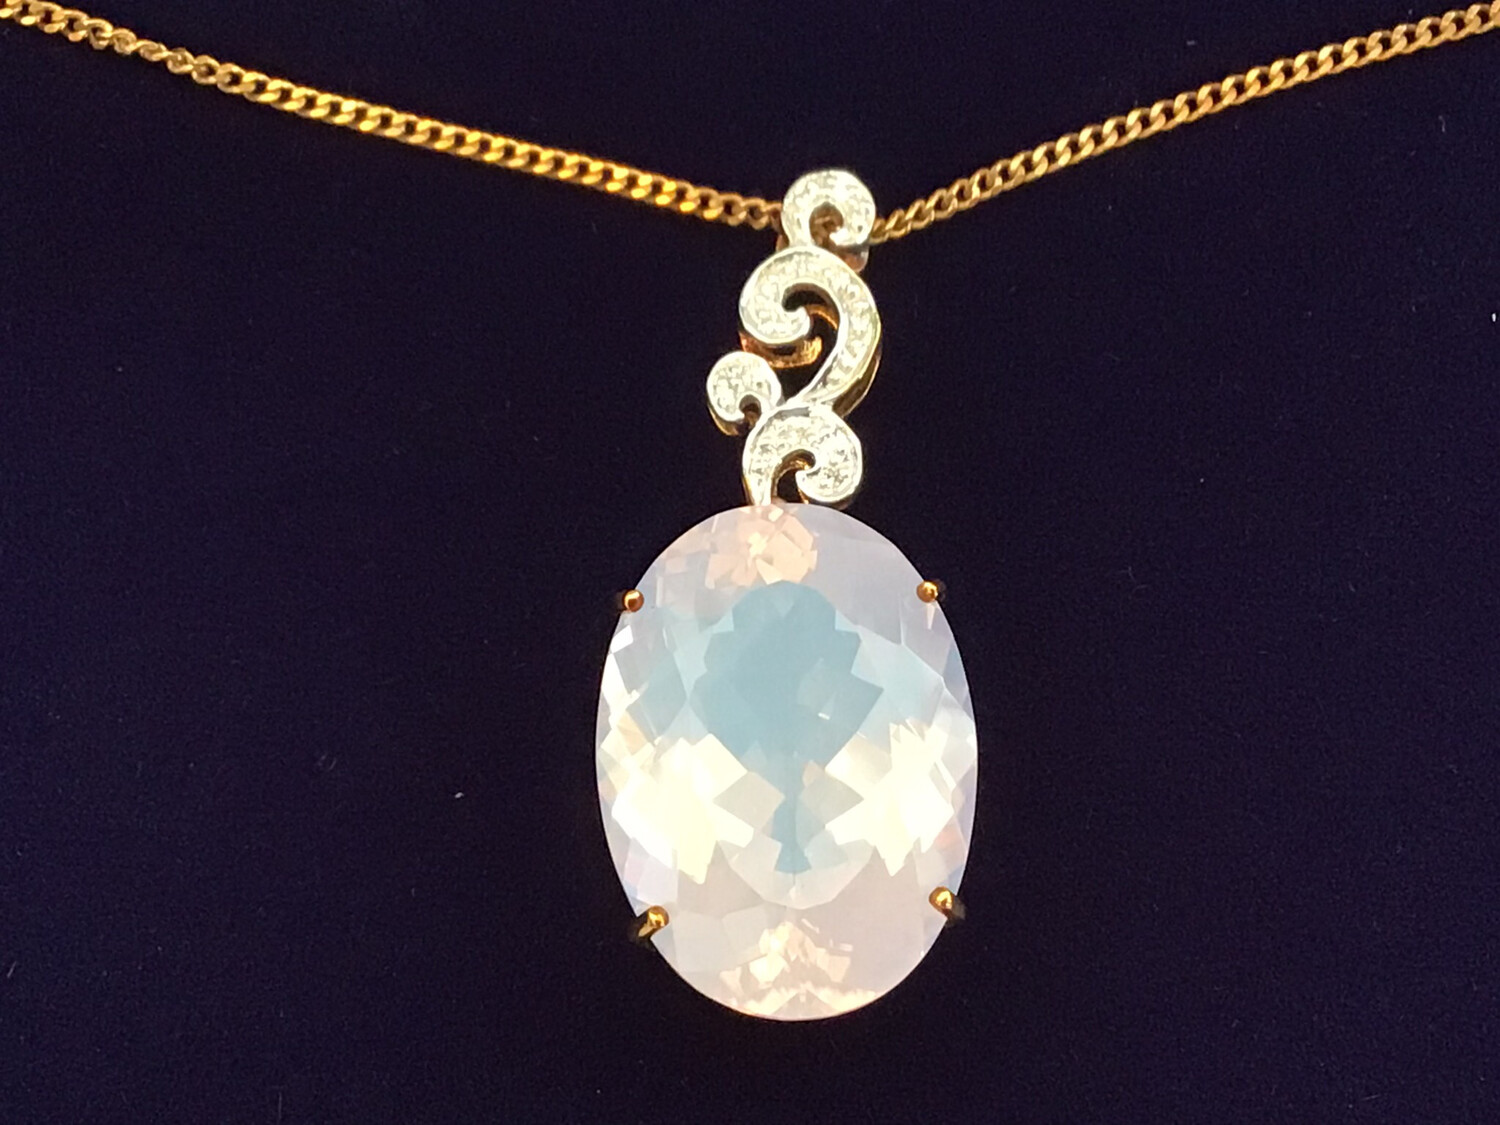 9k Yellow Gold & Diamond Necklace with huge Lavender Quartz stone